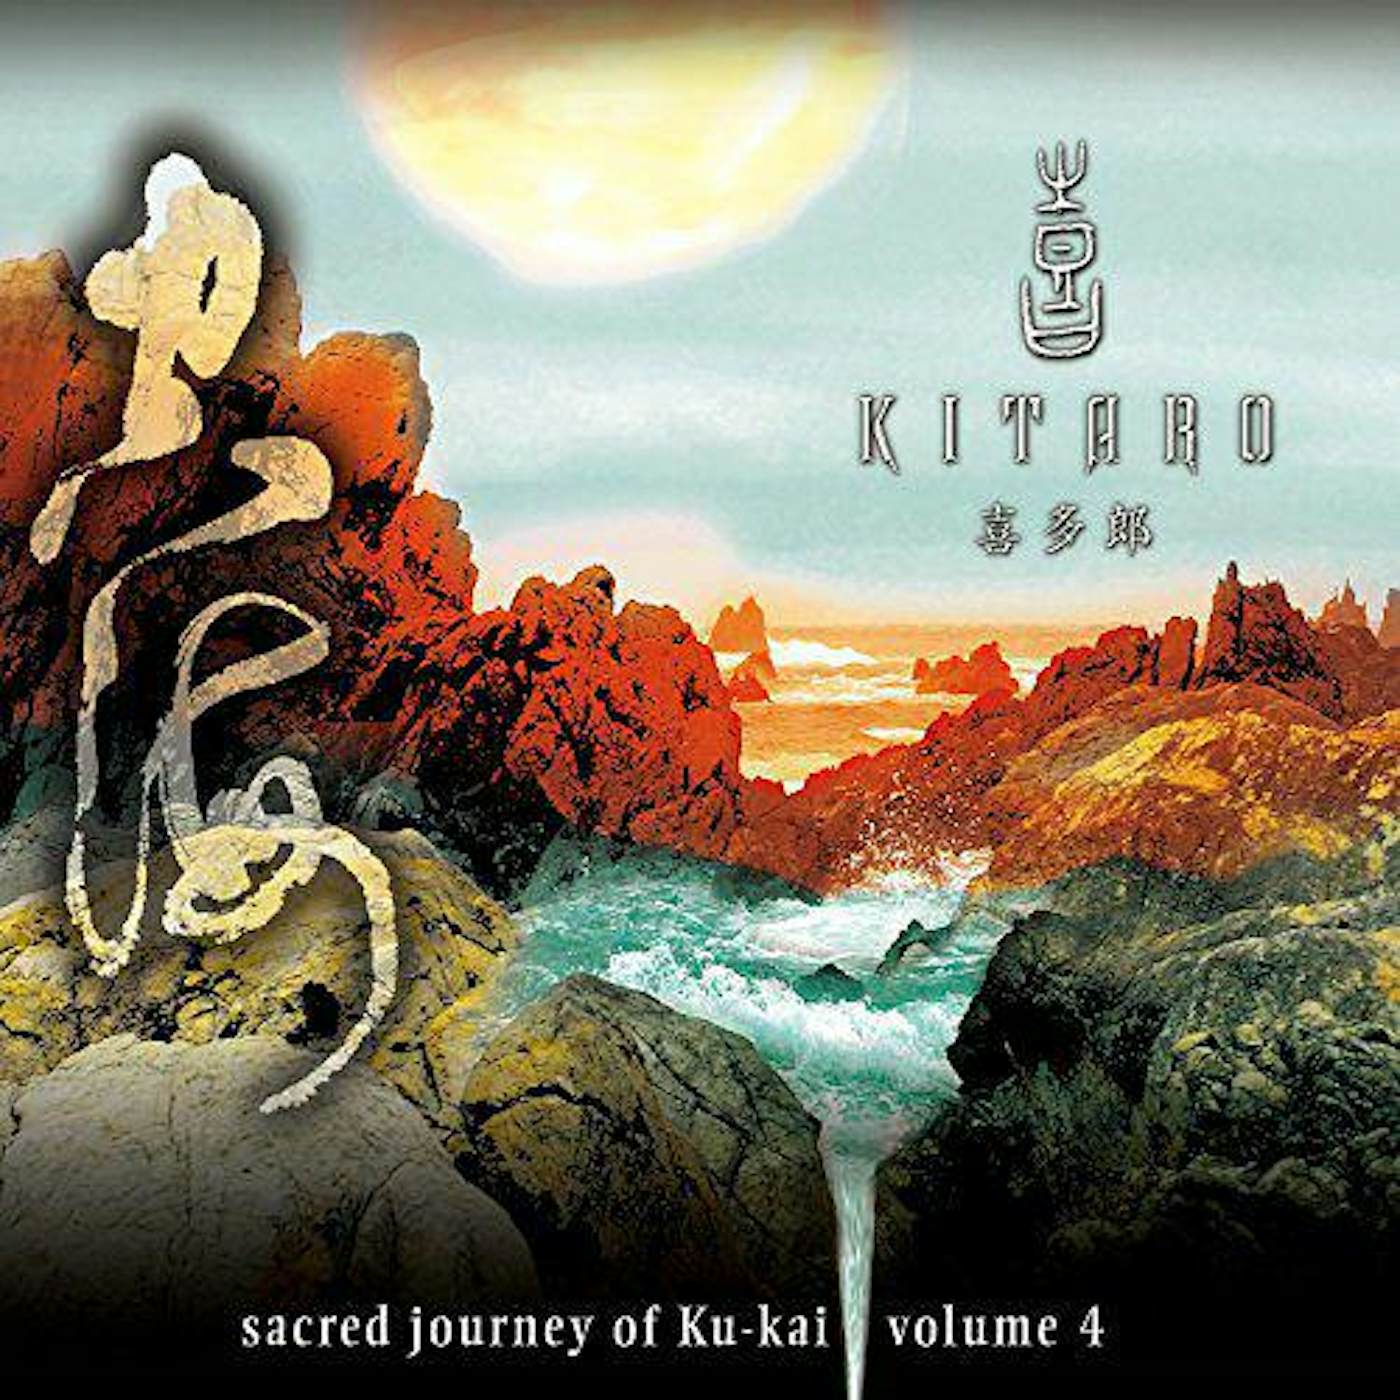 Kitaro Vol. 4: Sacred Journey Of Ku Kai Vinyl Record